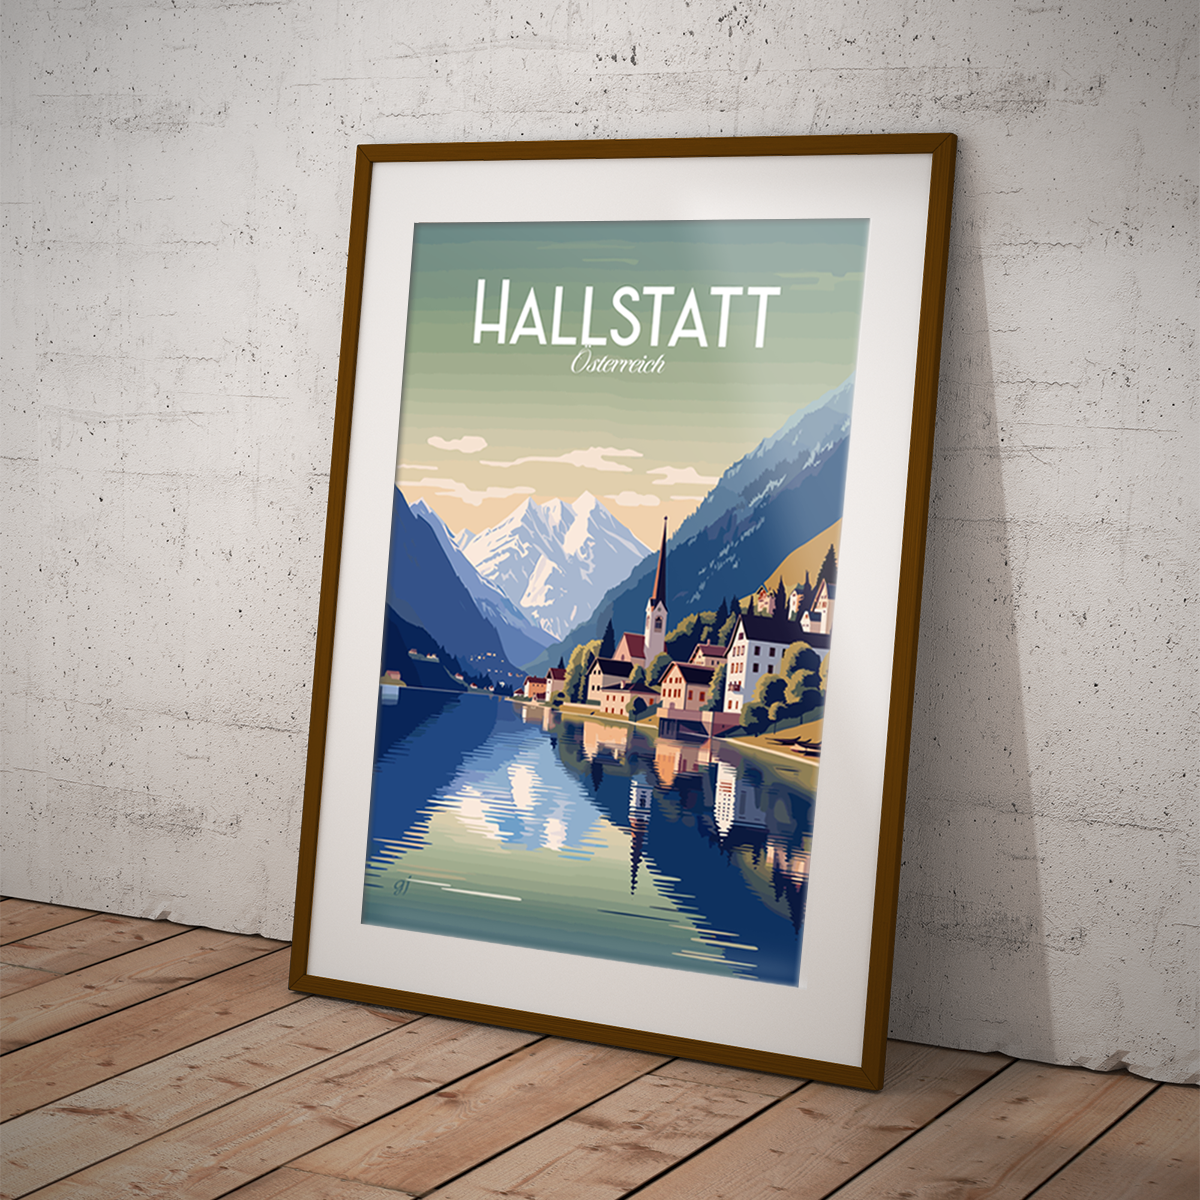 Hallstatt poster by bon voyage design